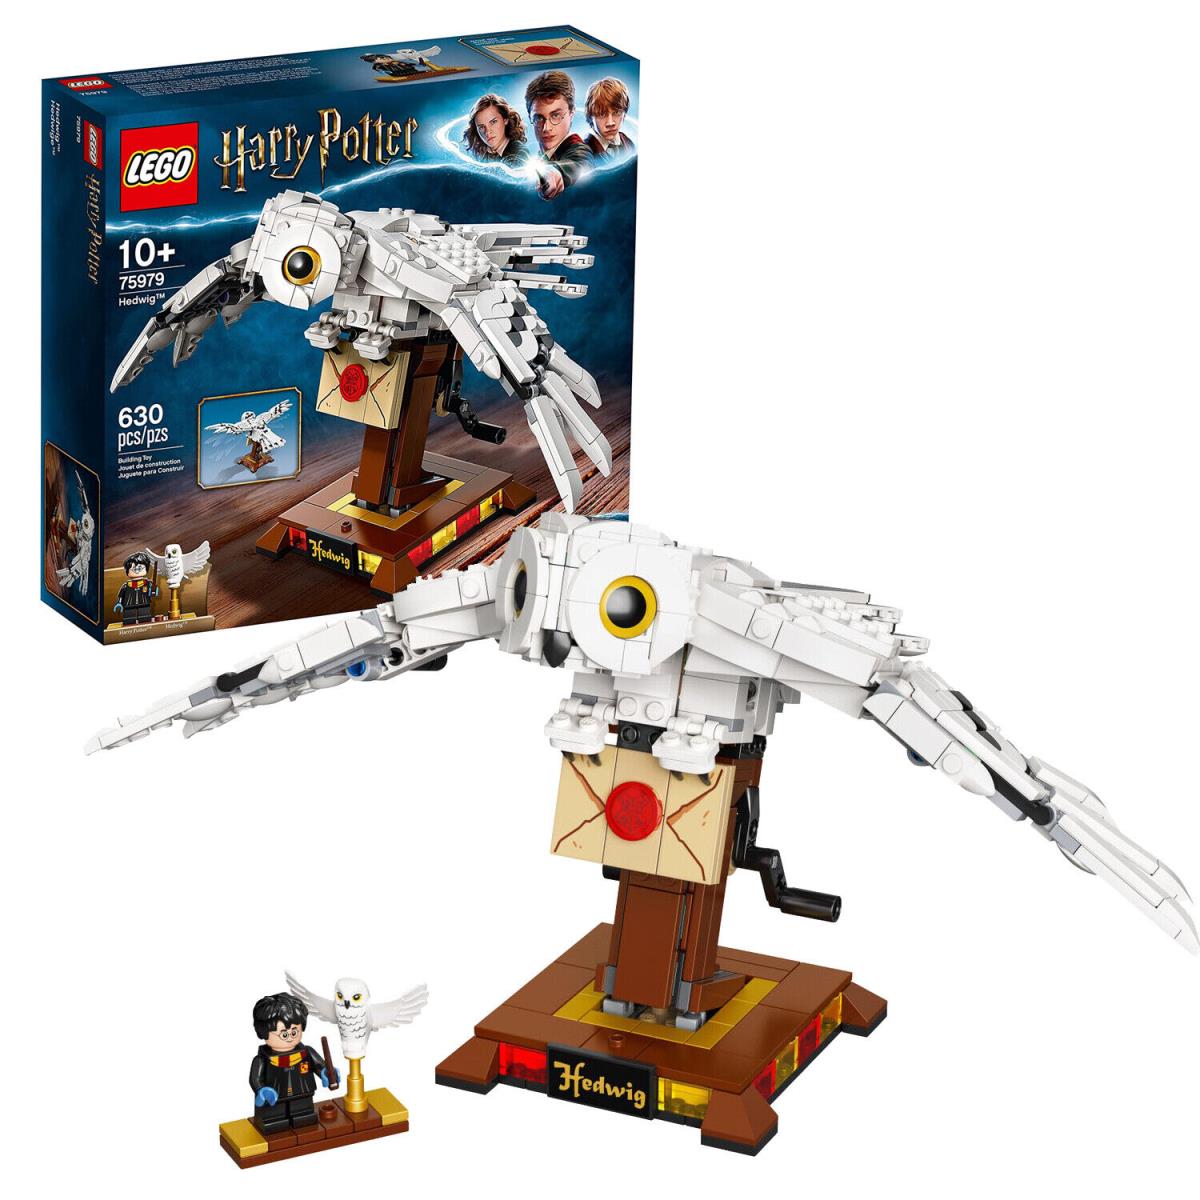 Lego 75979 Harry Potter Hedwig Owl Set 2020 Retired